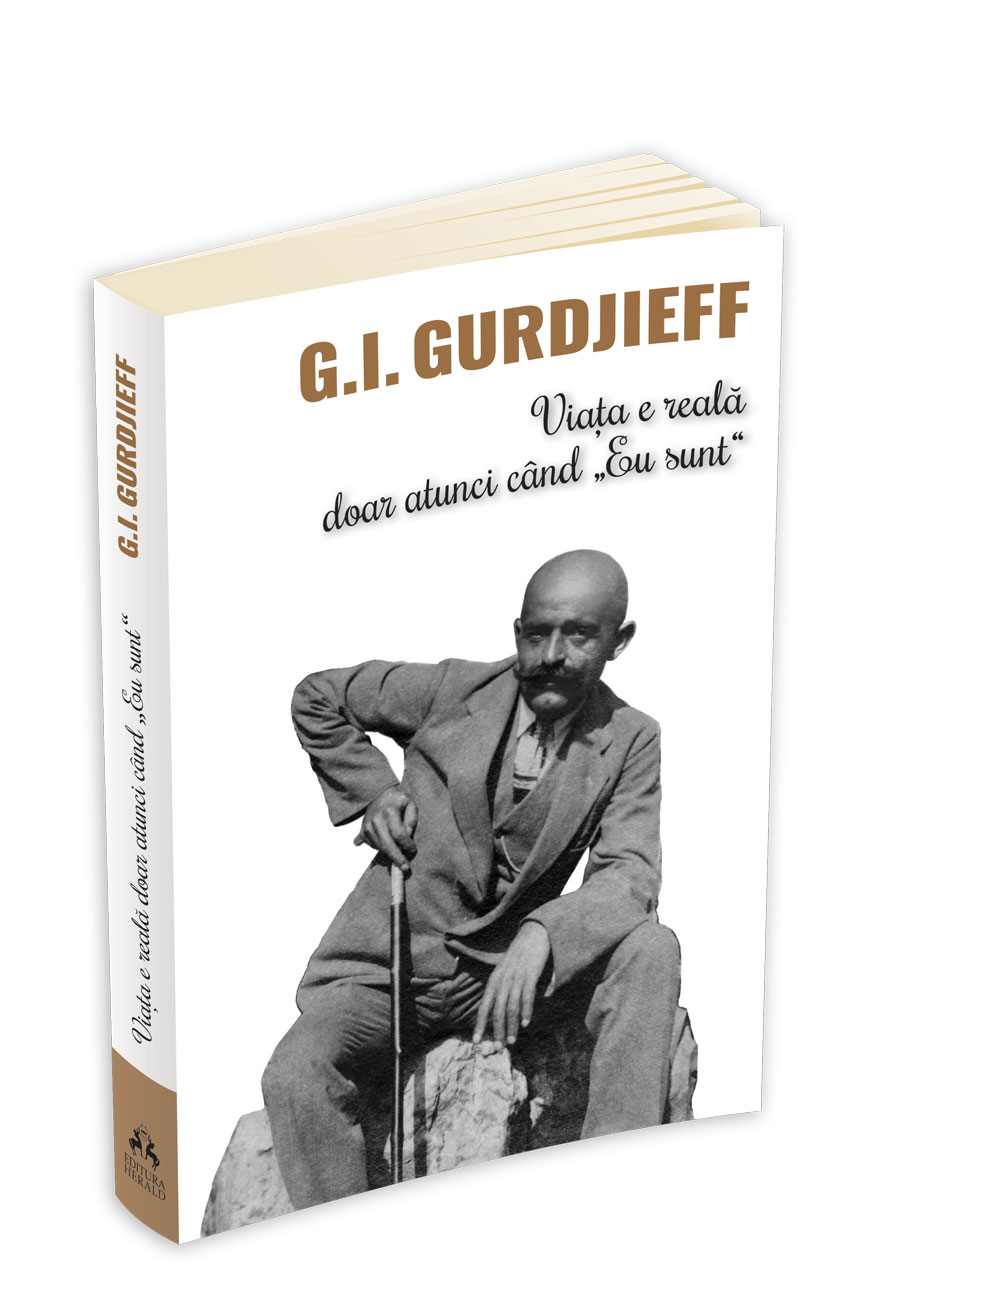 Viata e reala doar atunci cand eu sunt - G.I. Gurdjieff